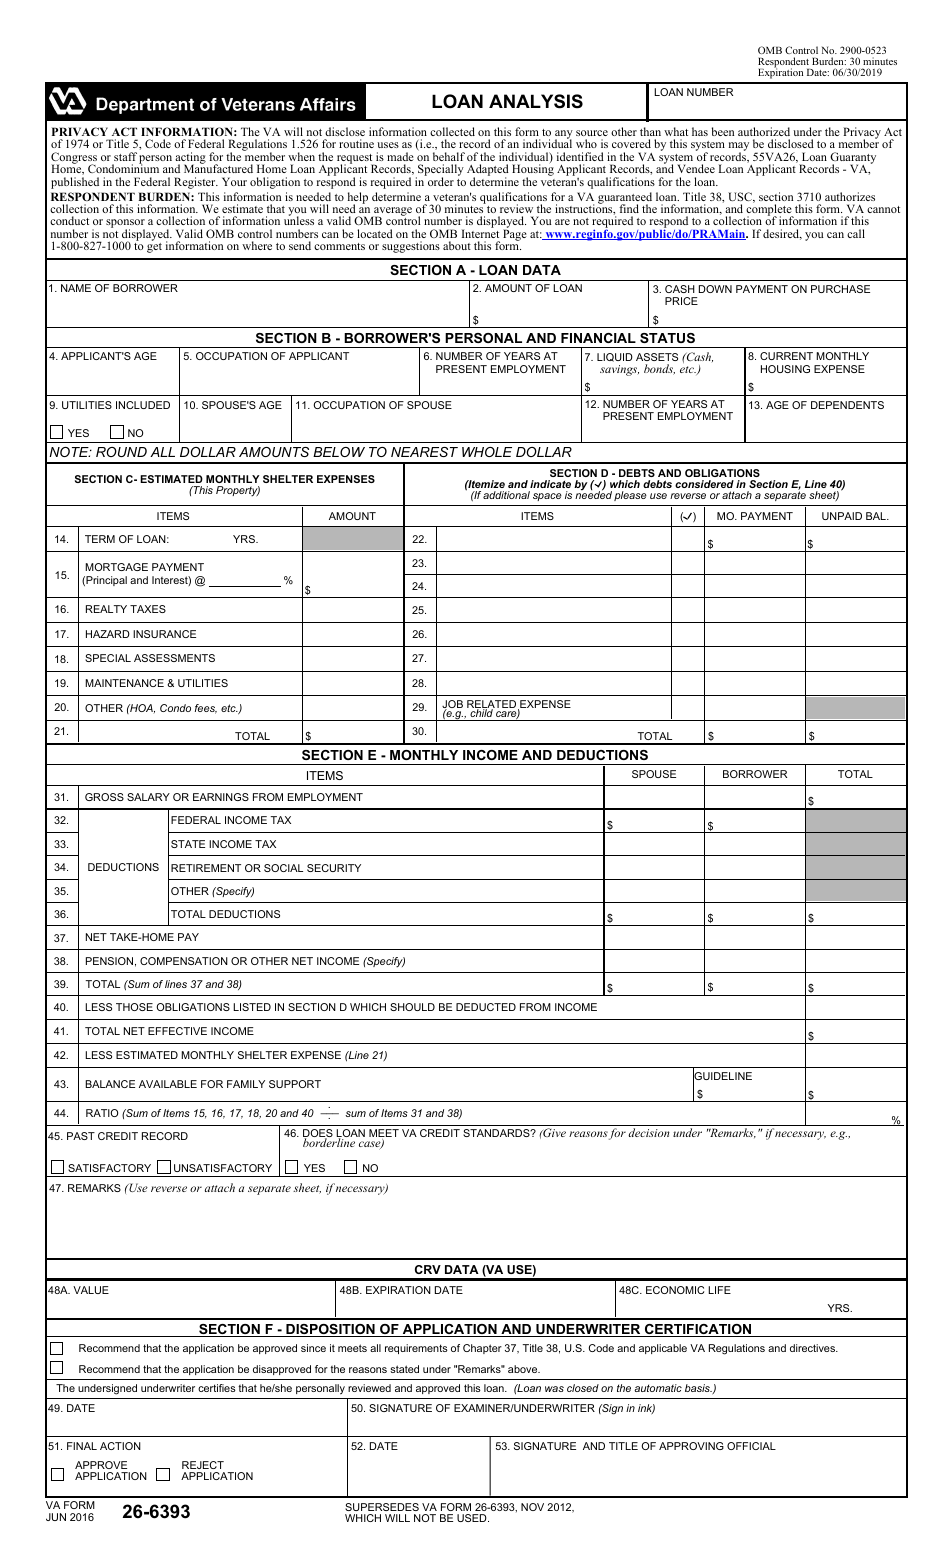 VA Form 26-6393 Loan Analysis, Page 1